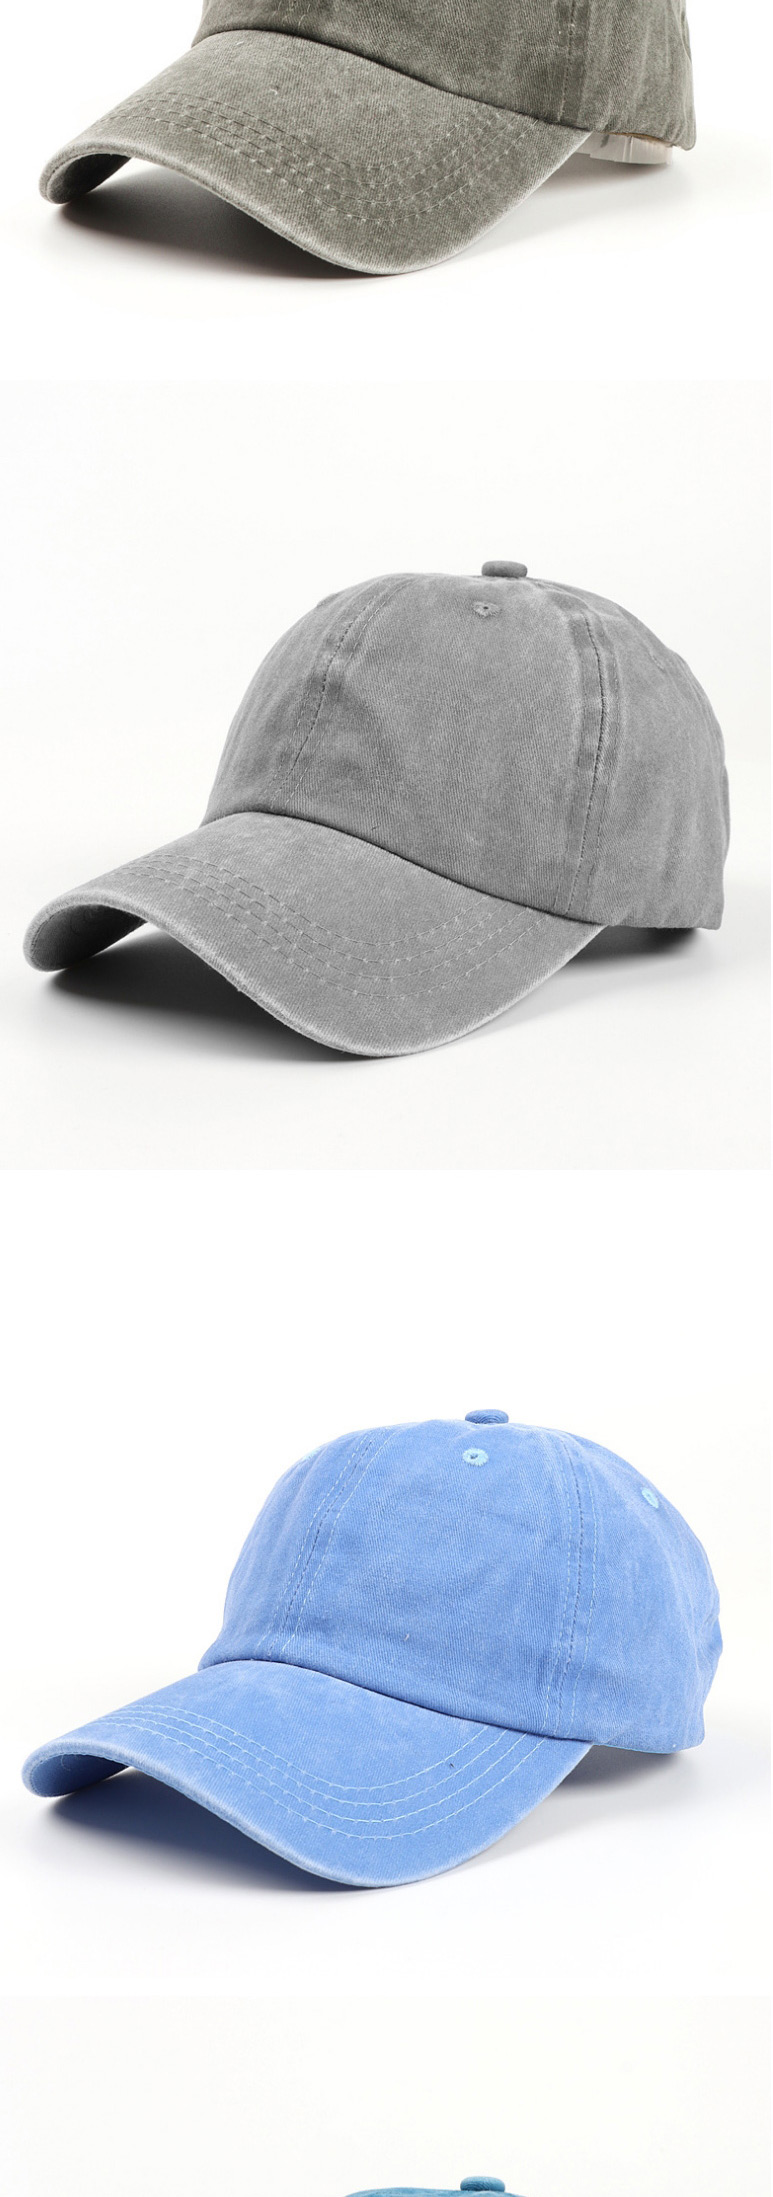 Fashion Dark Blue Washed Distressed Denim Soft Top Curved Brim Cap,Baseball Caps